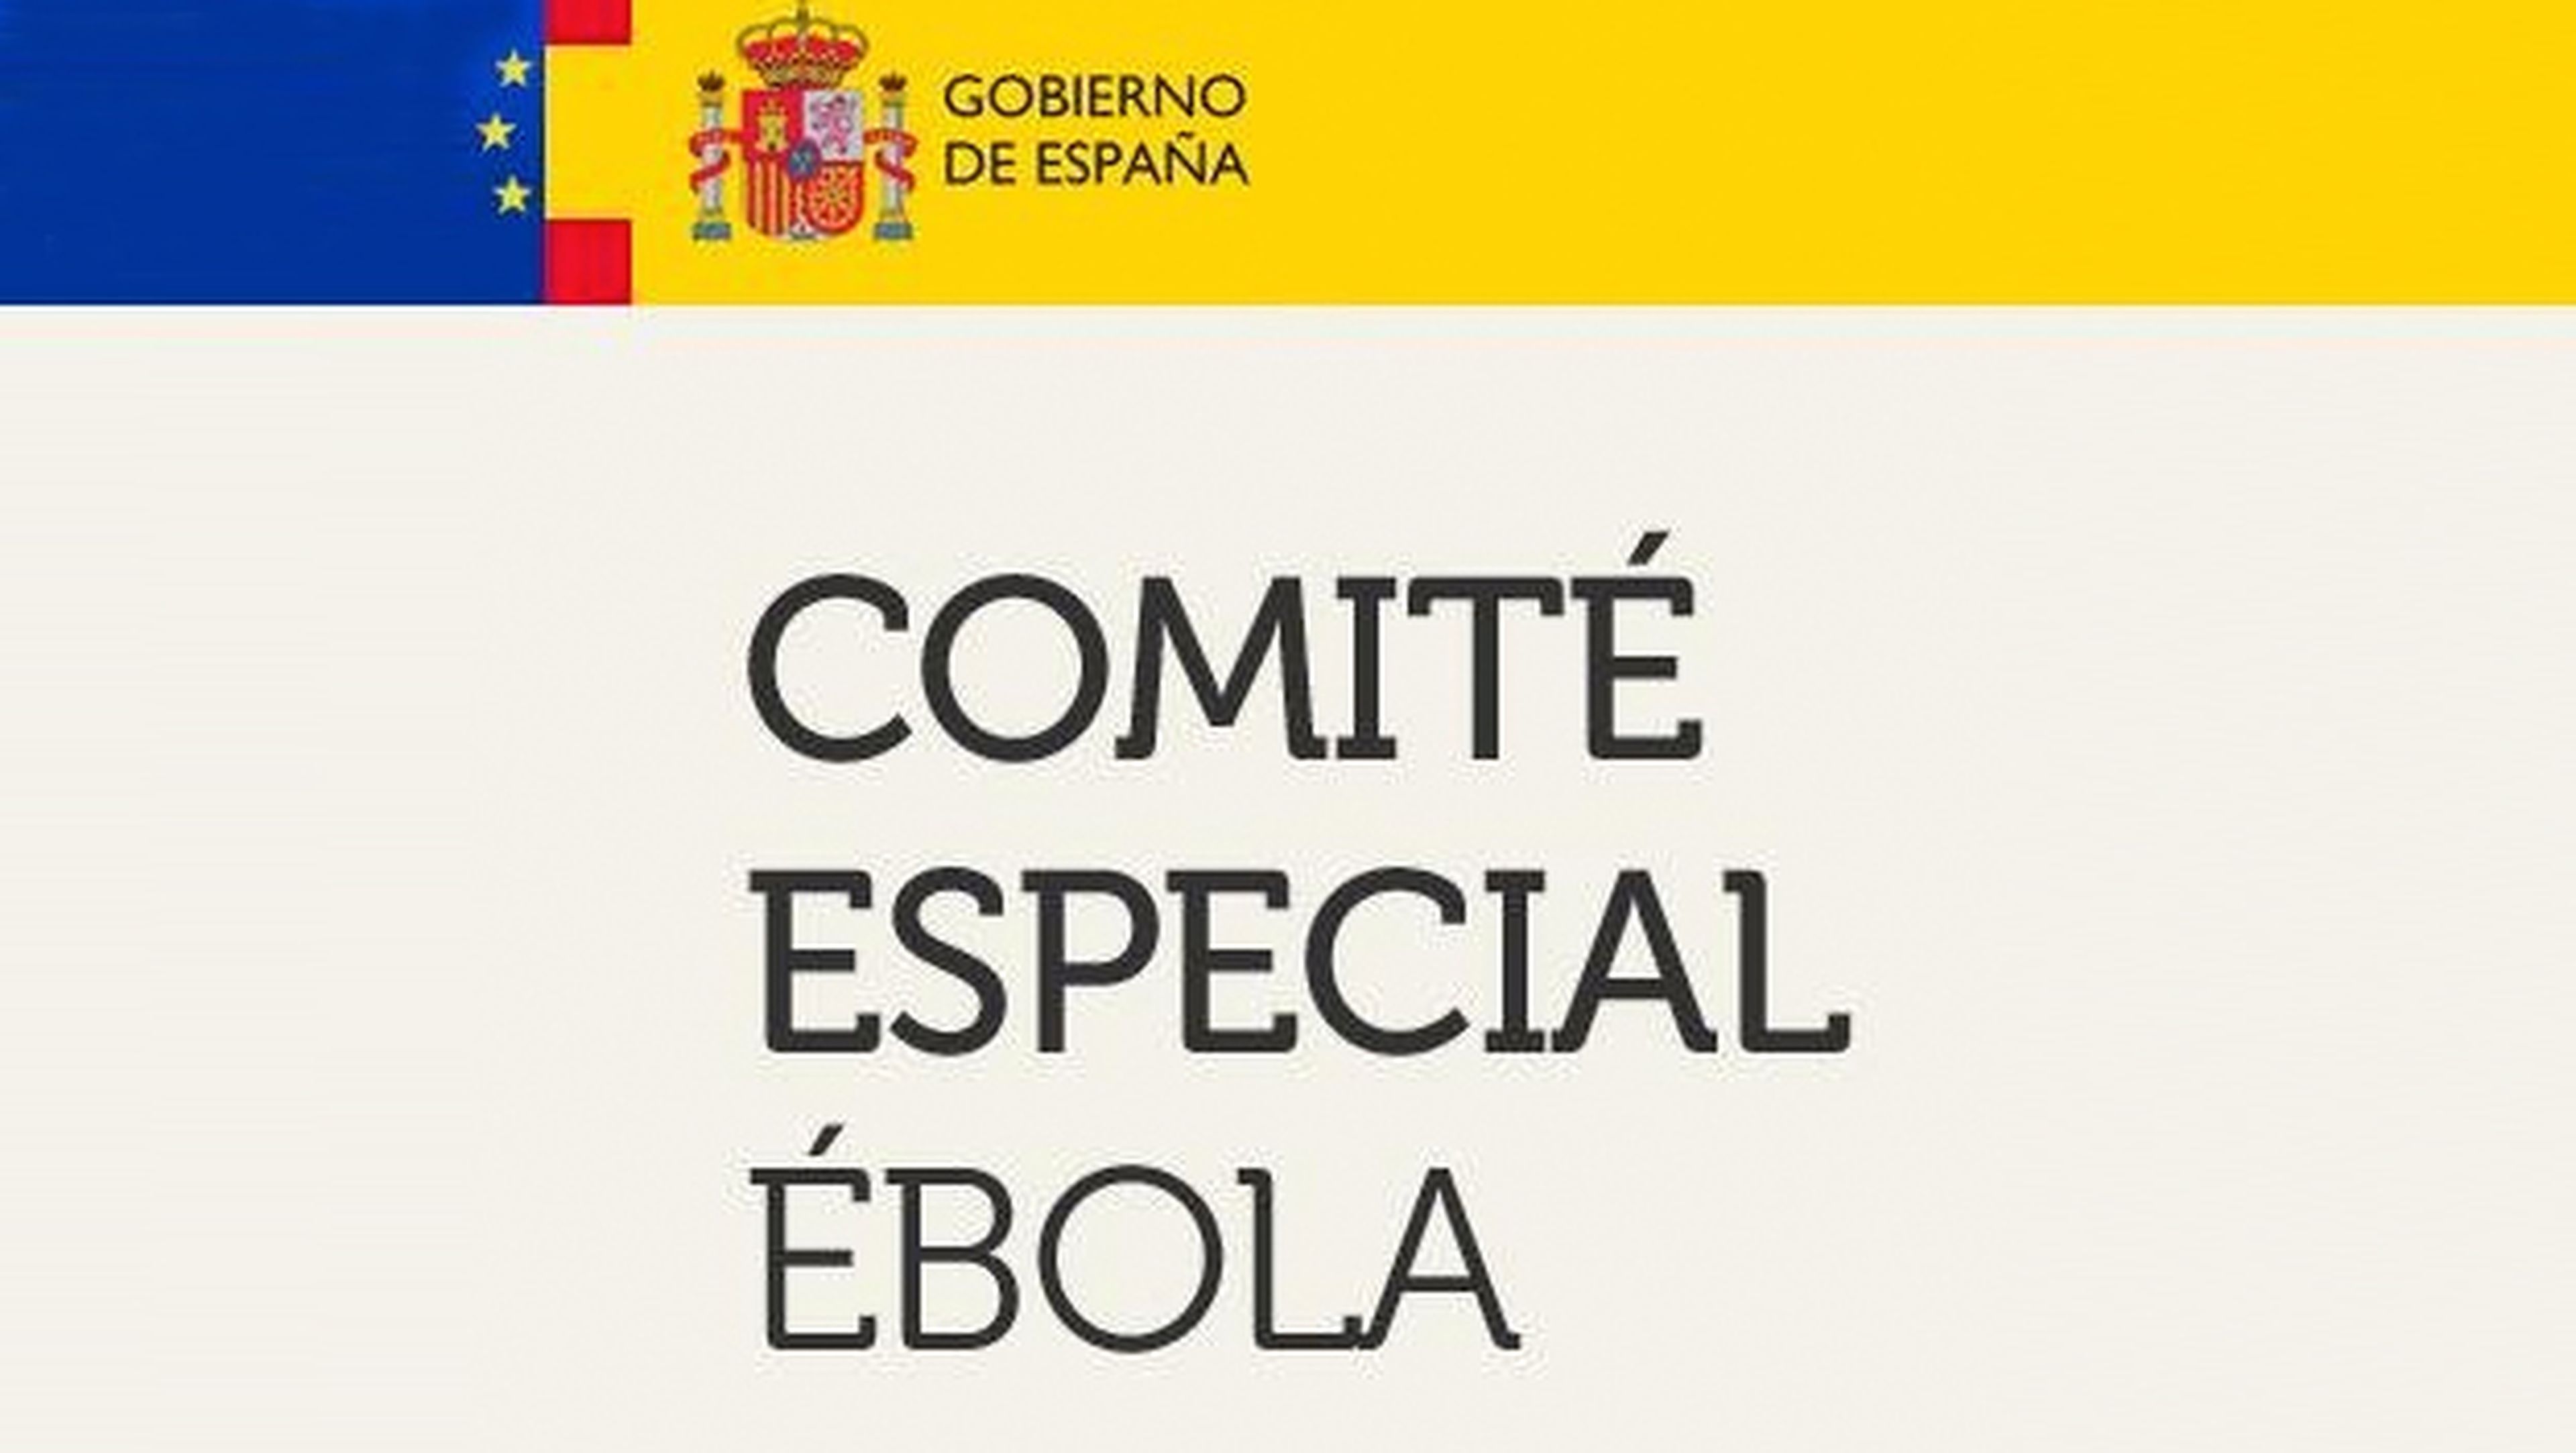 El Comité Especial del Ébola ya muestra actividad en Twitter